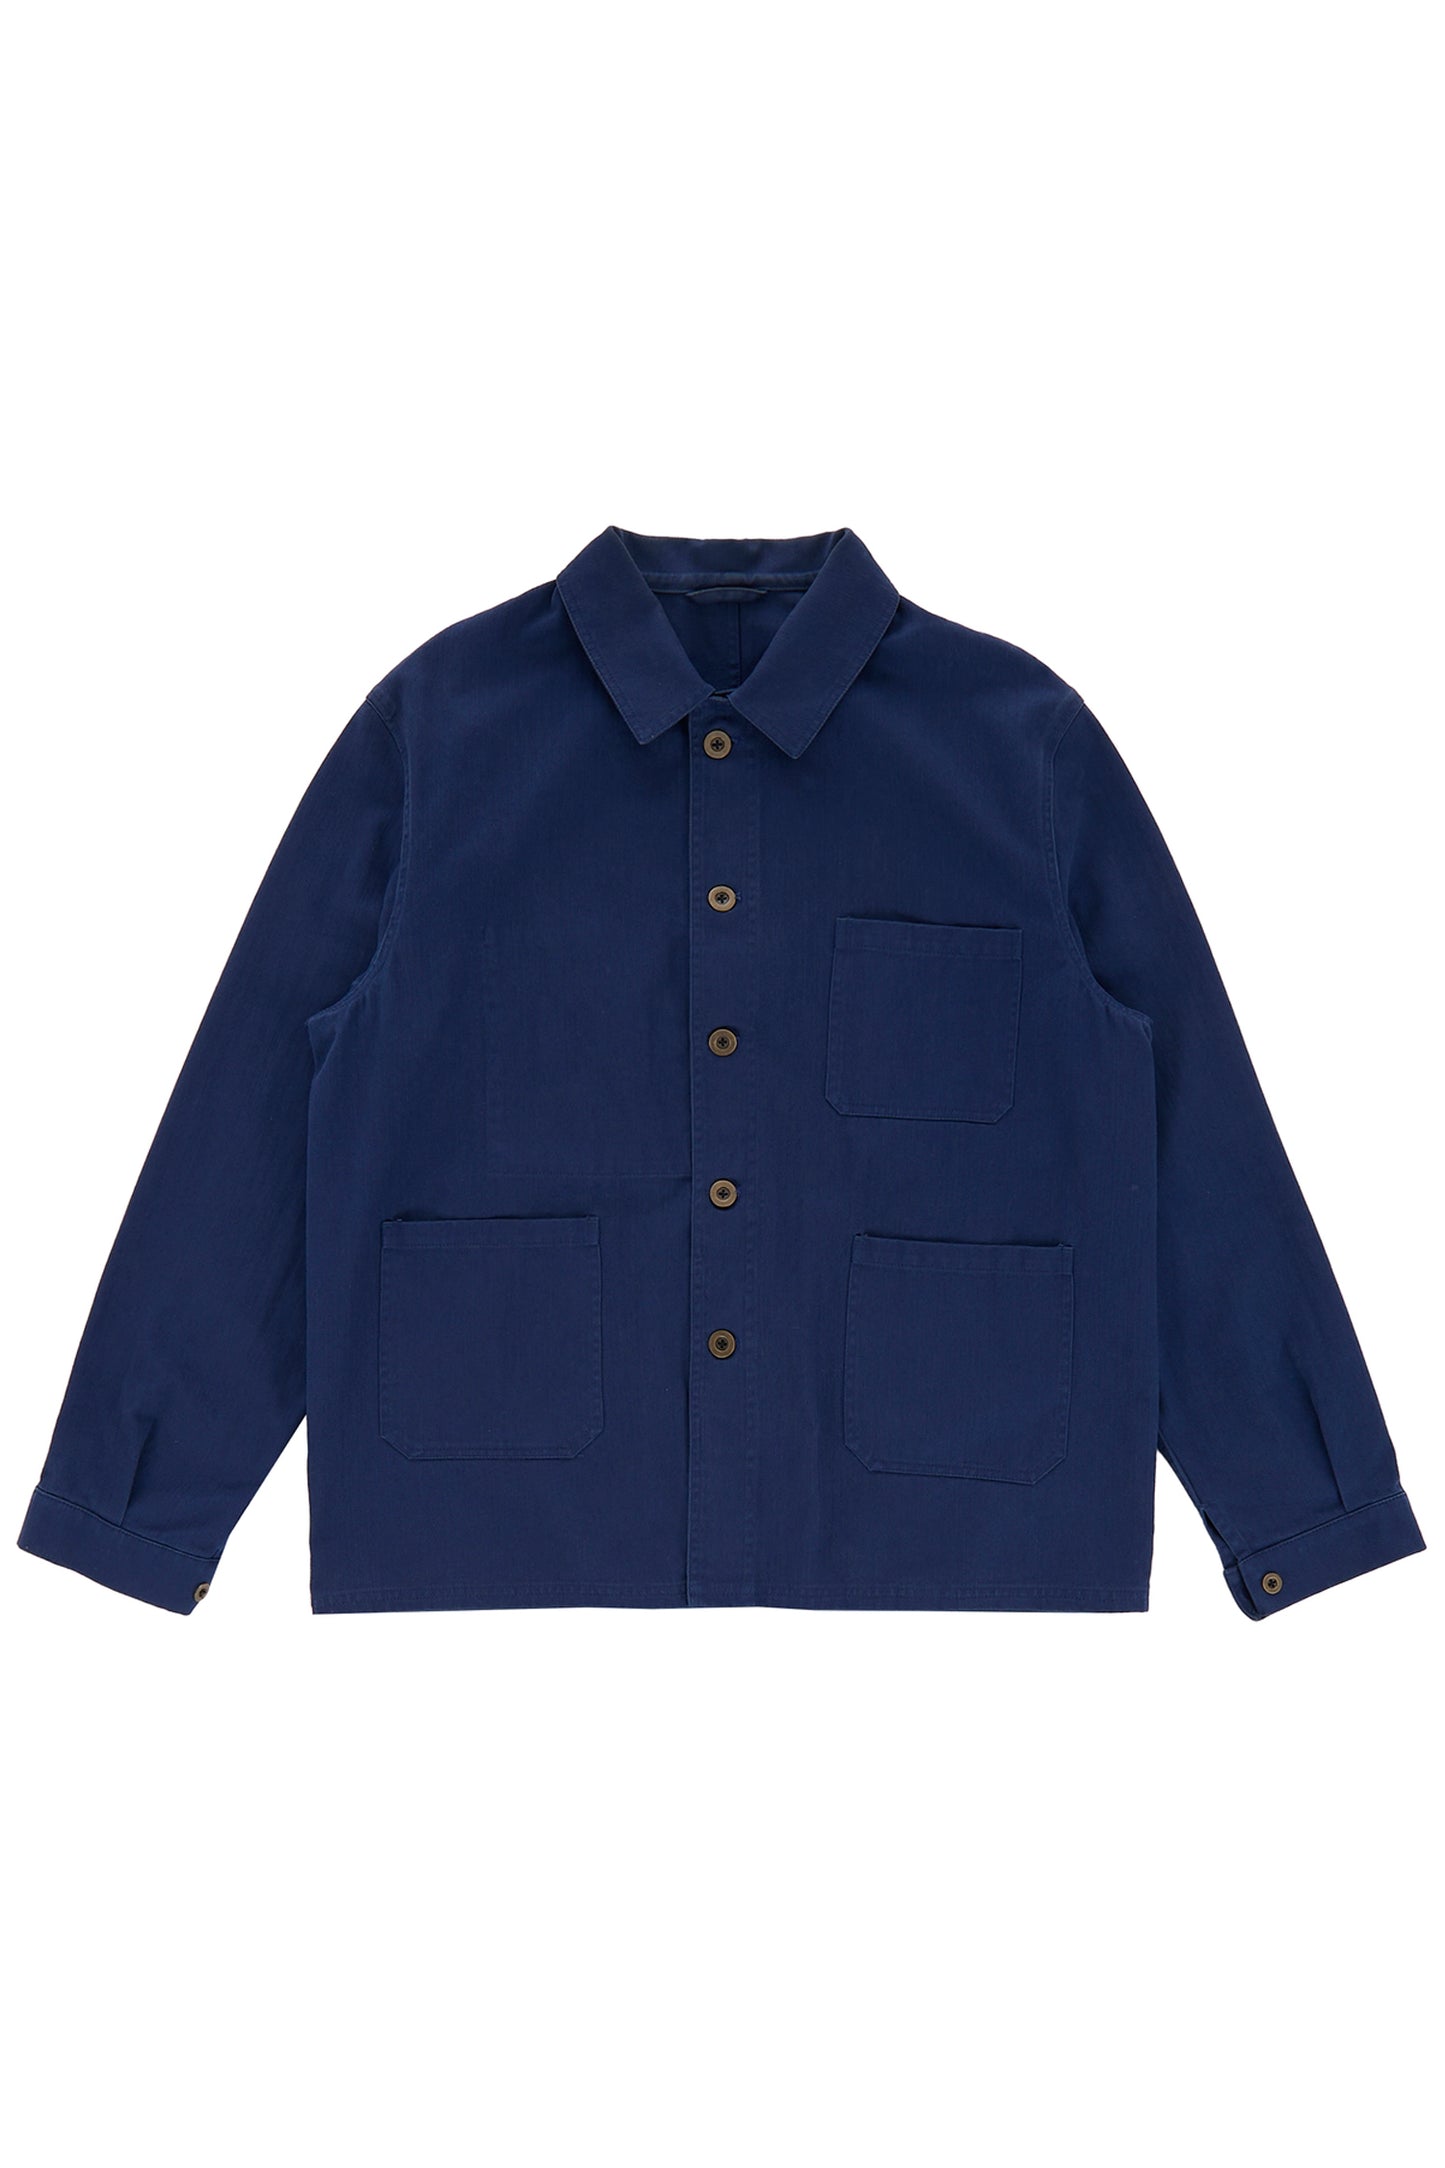 French Work Jacket – Navy Blue